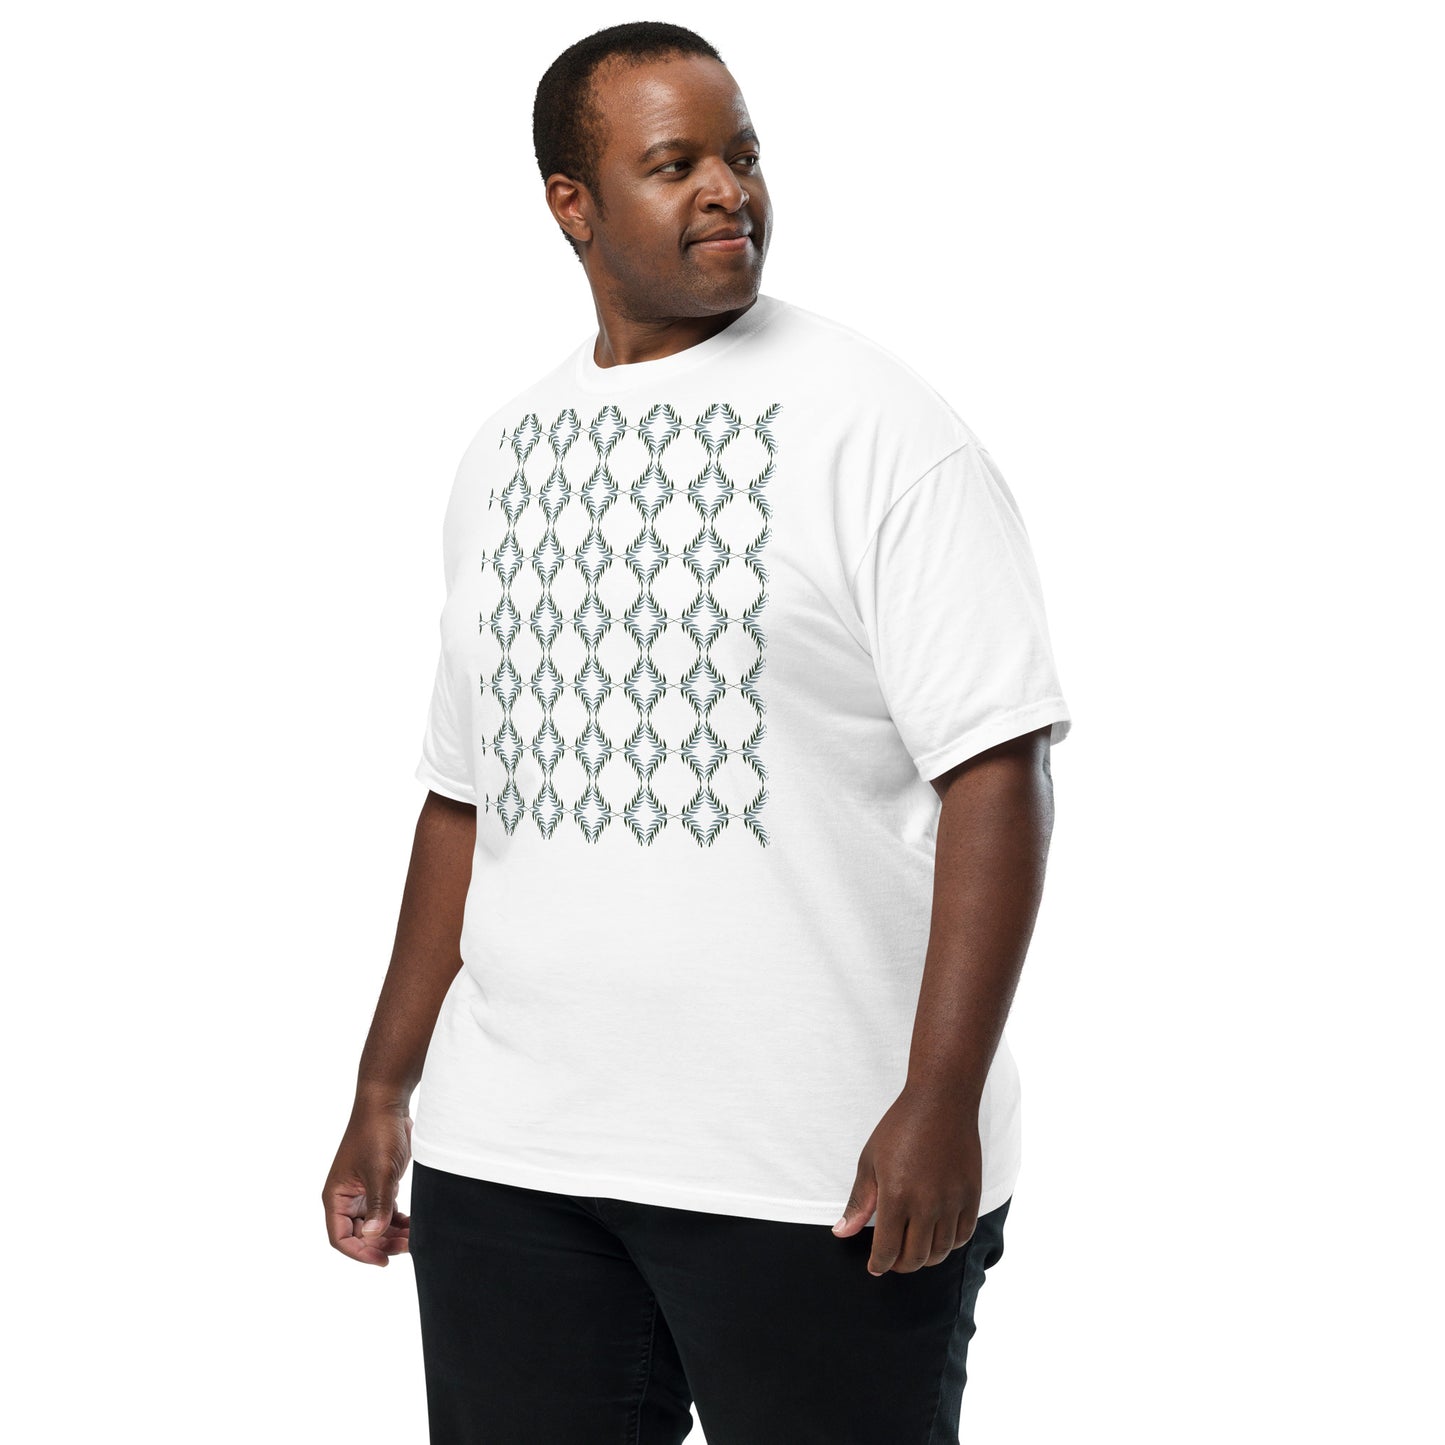 Leafy Elegance: Unisex Nature Inspired T-shirt